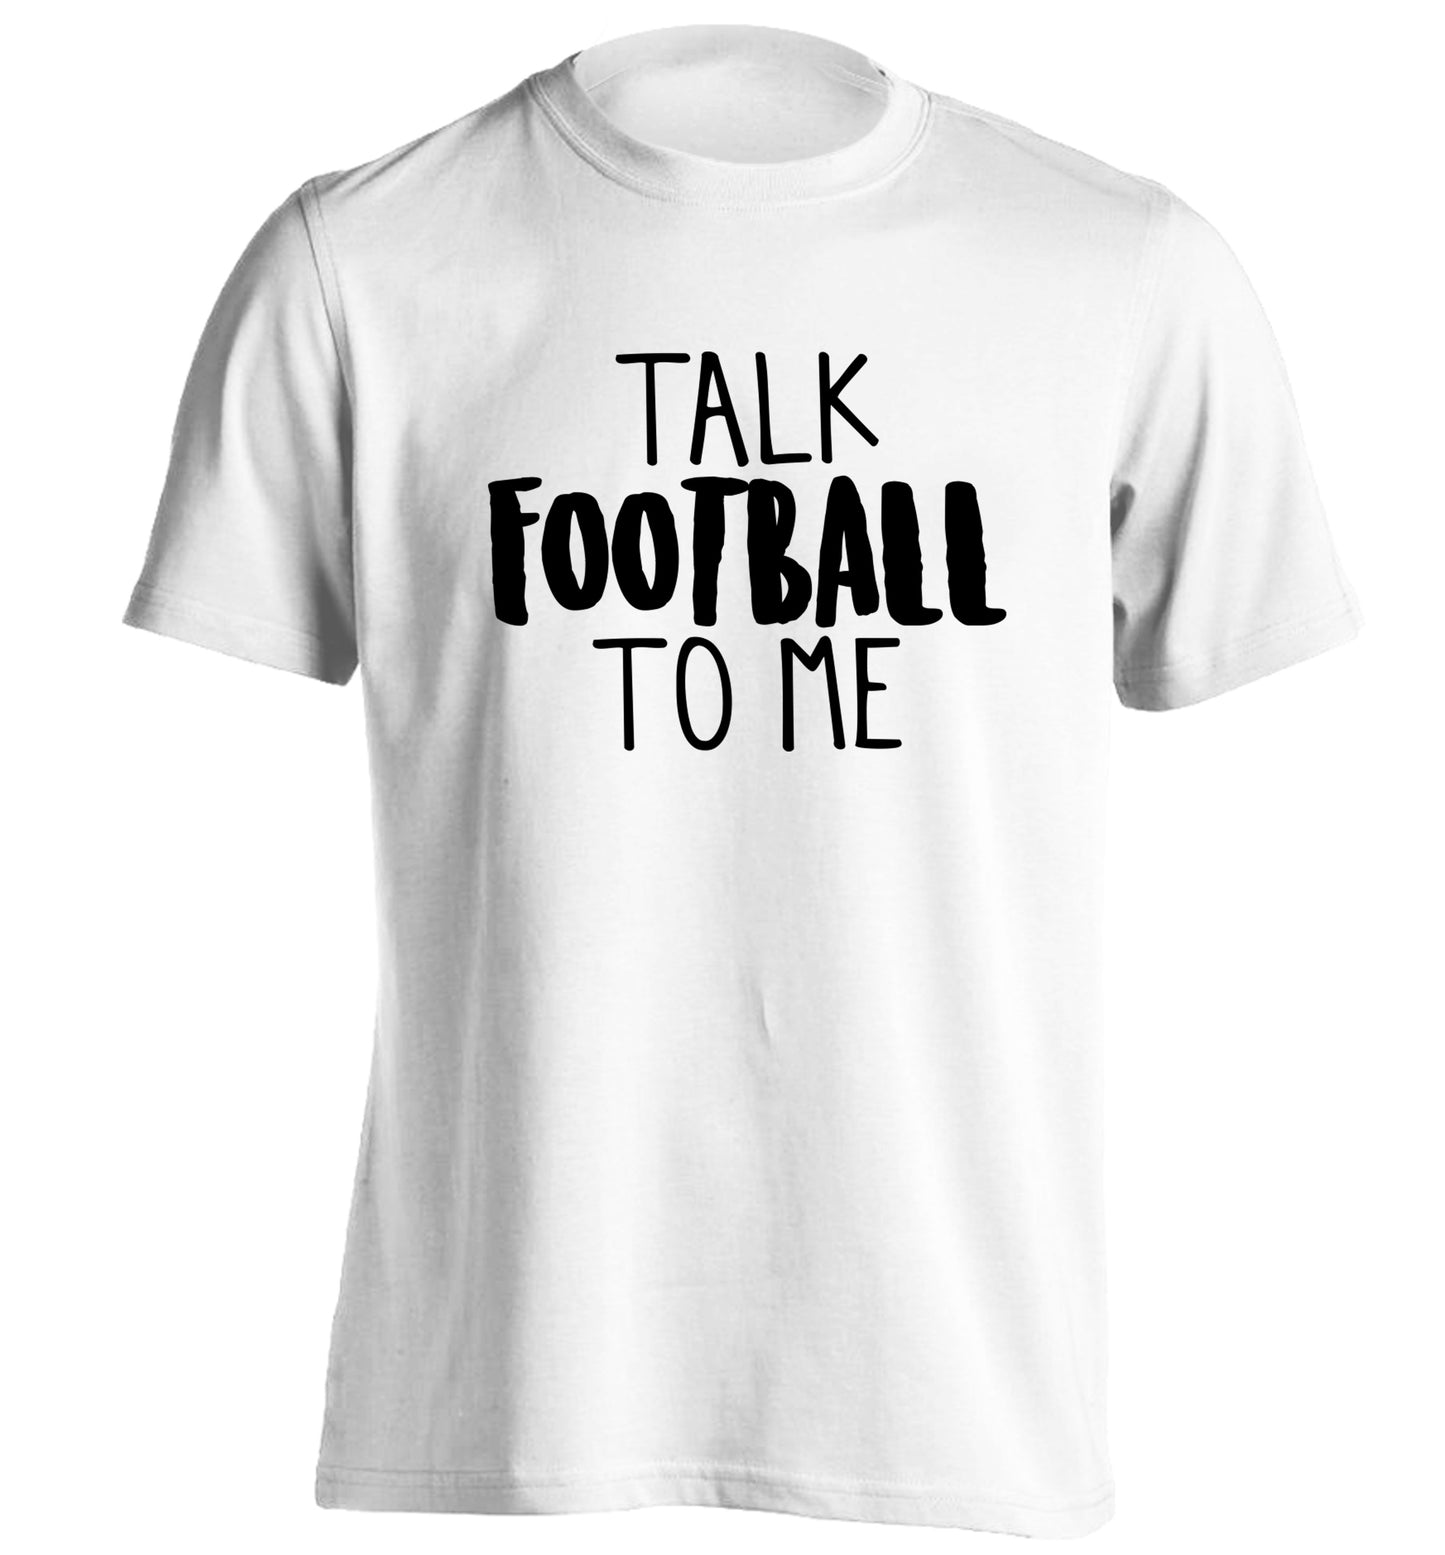 Talk football to me adults unisexwhite Tshirt 2XL